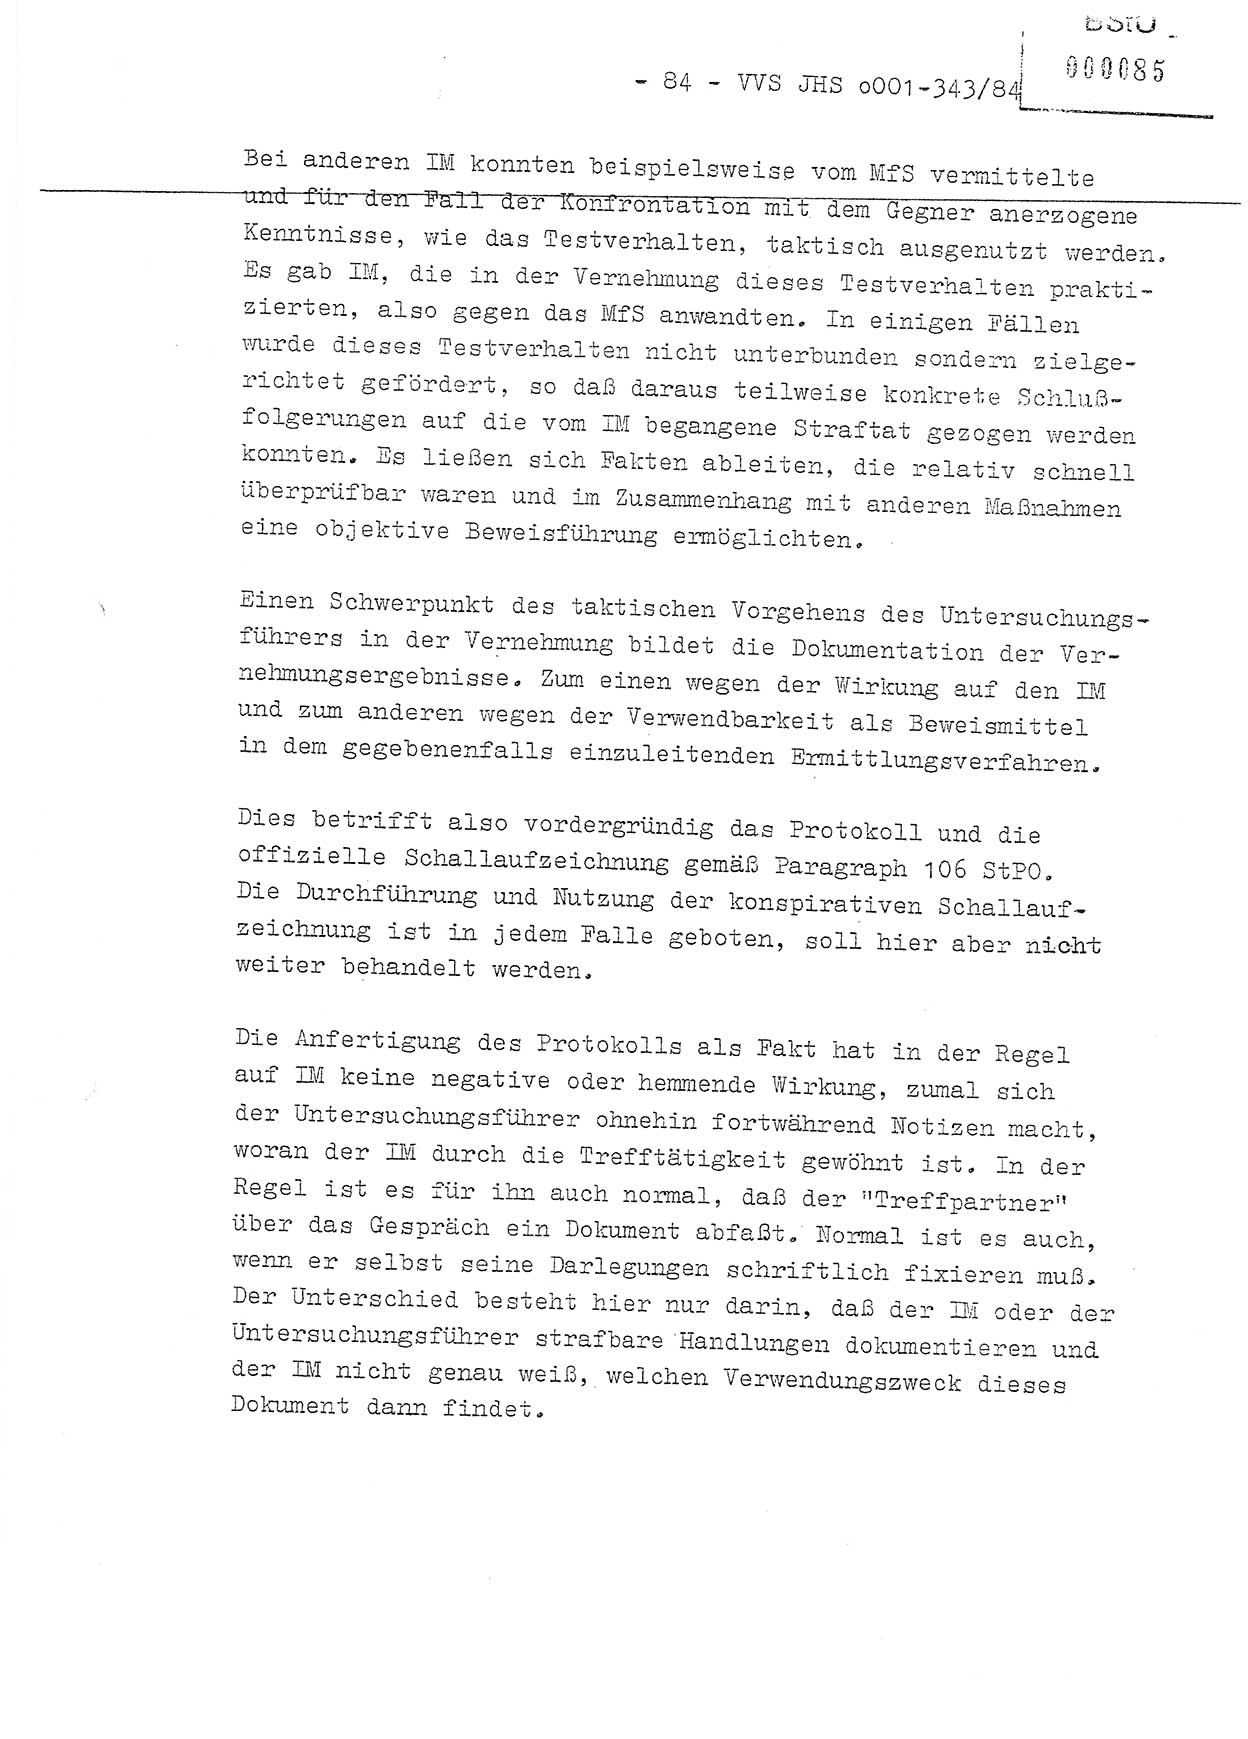 Diplomarbeit, Oberleutnant Bernd Michael (HA Ⅸ/5), Oberleutnant Peter Felber (HA IX/5), Ministerium für Staatssicherheit (MfS) [Deutsche Demokratische Republik (DDR)], Juristische Hochschule (JHS), Vertrauliche Verschlußsache (VVS) o001-343/84, Potsdam 1985, Seite 84 (Dipl.-Arb. MfS DDR JHS VVS o001-343/84 1985, S. 84)